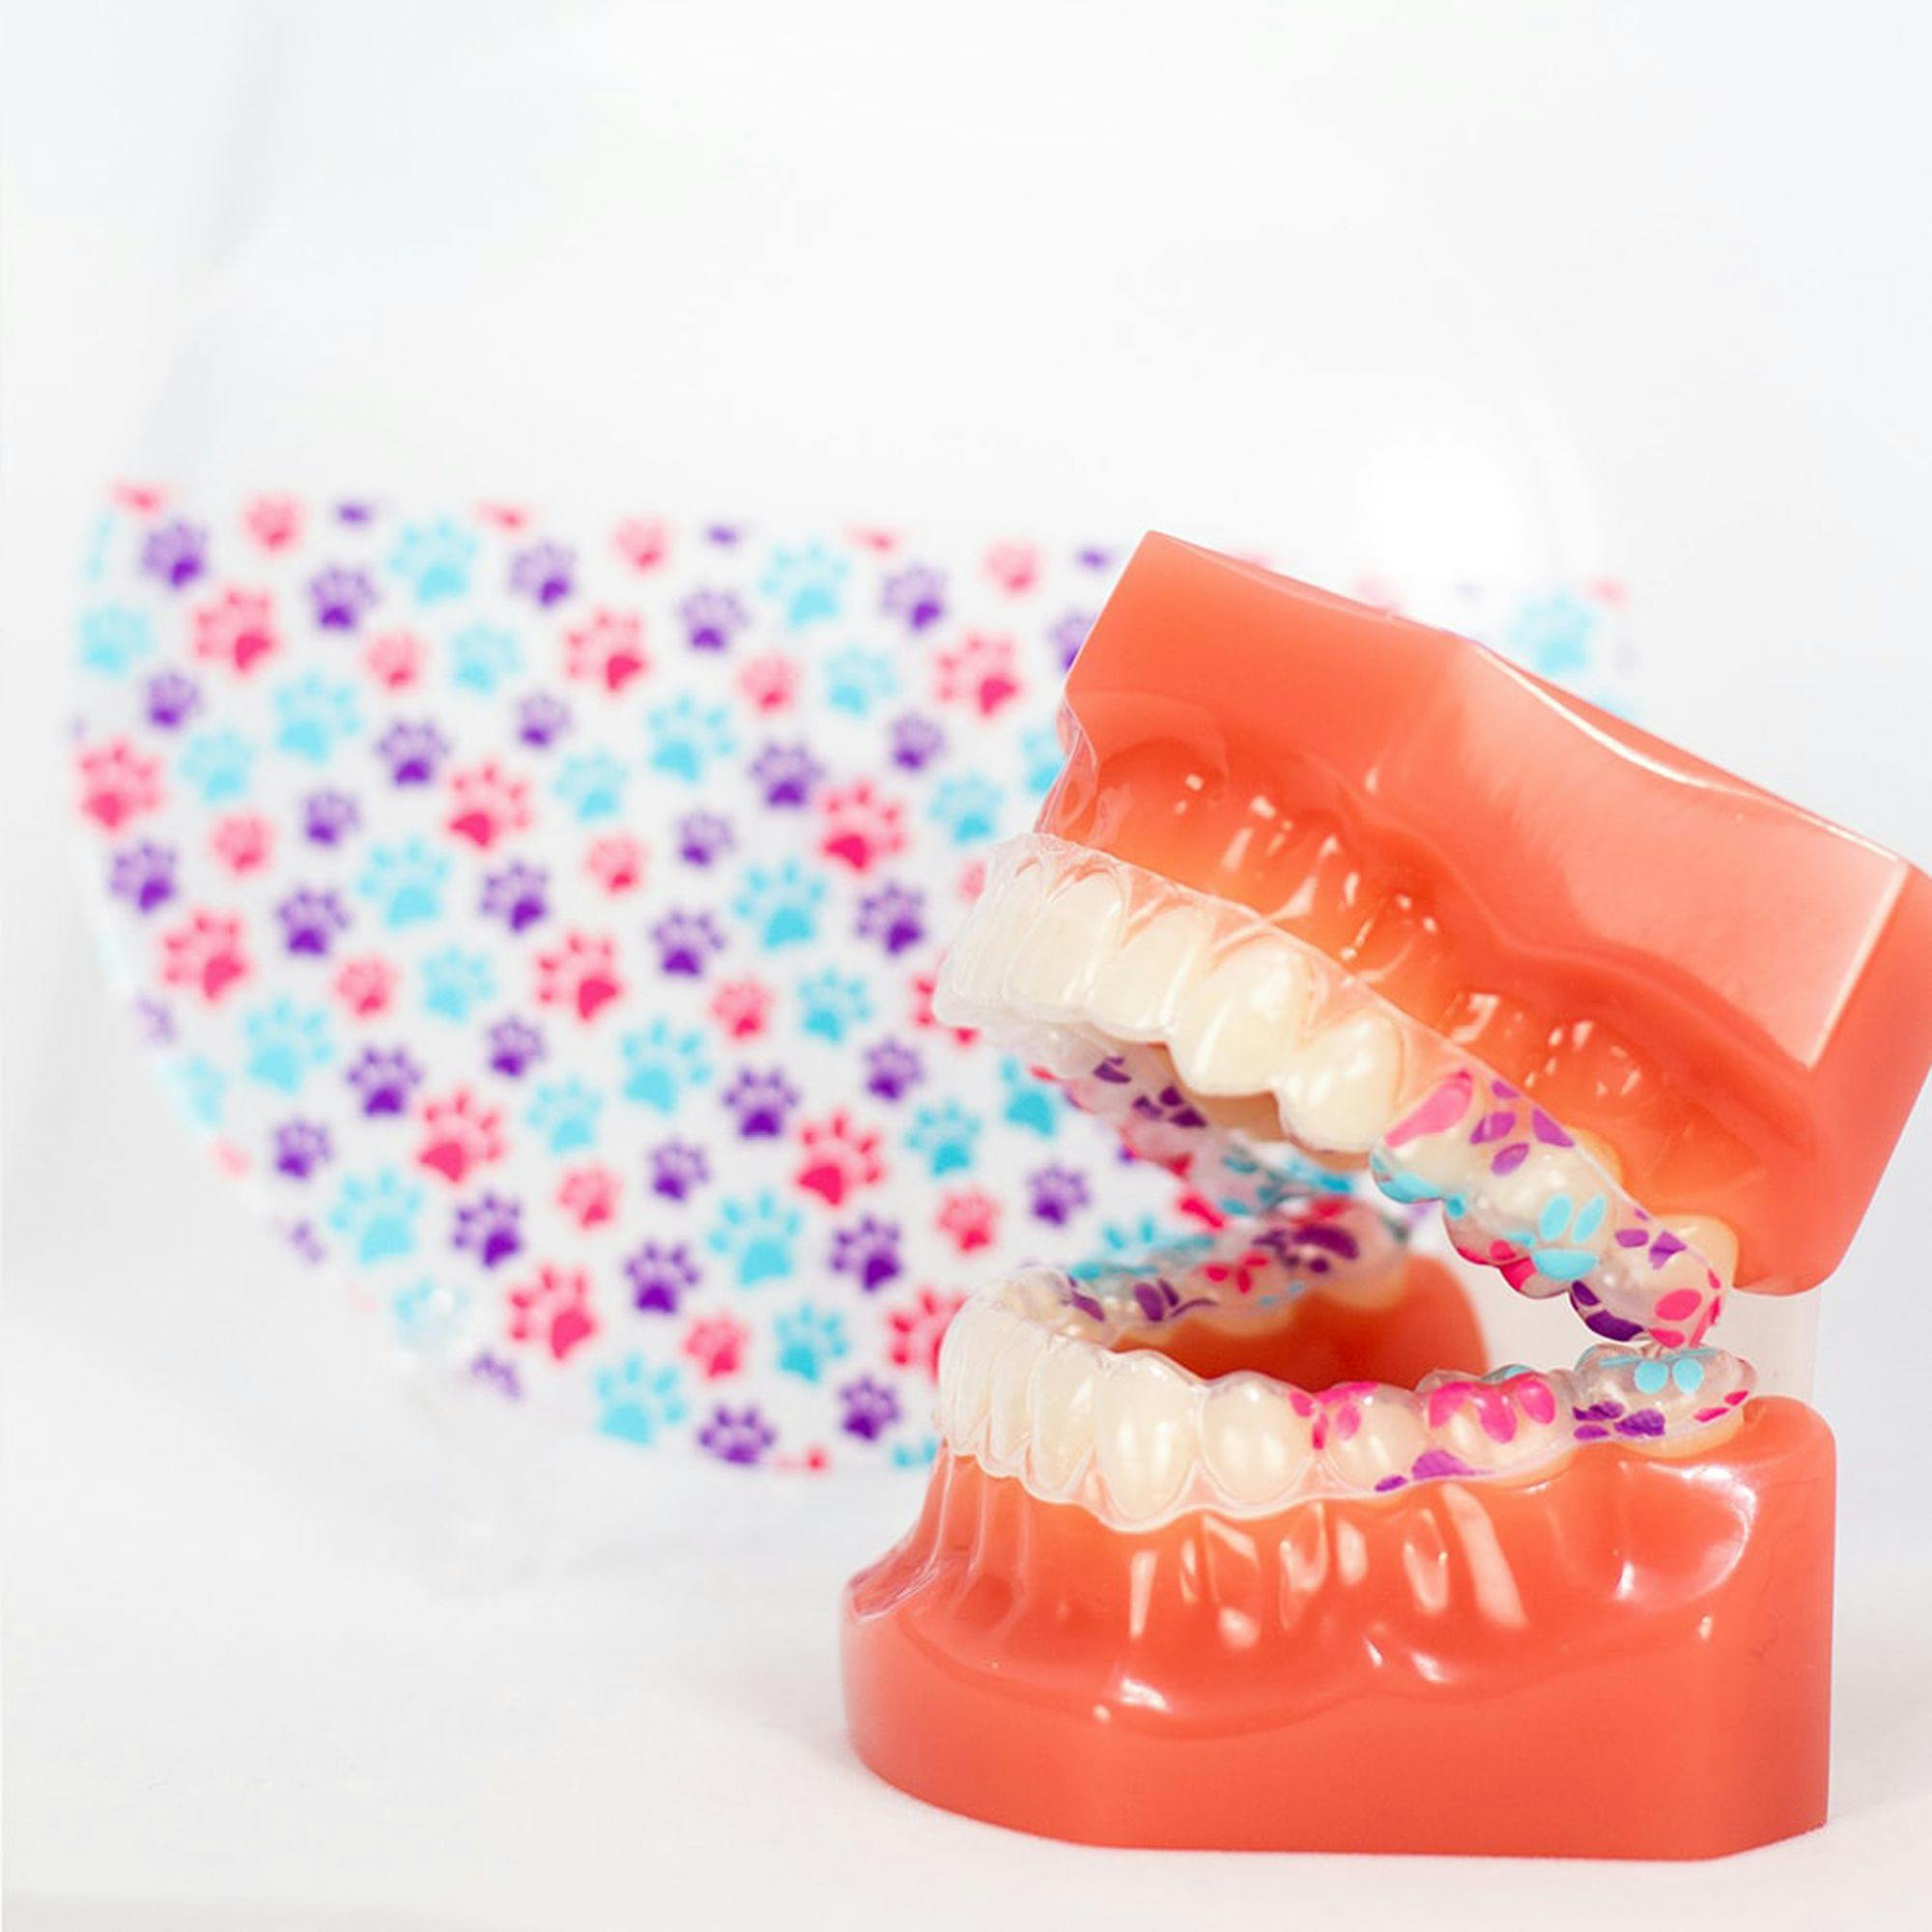 Dentagrafix Dental Appliances Now Available Through EasyRx